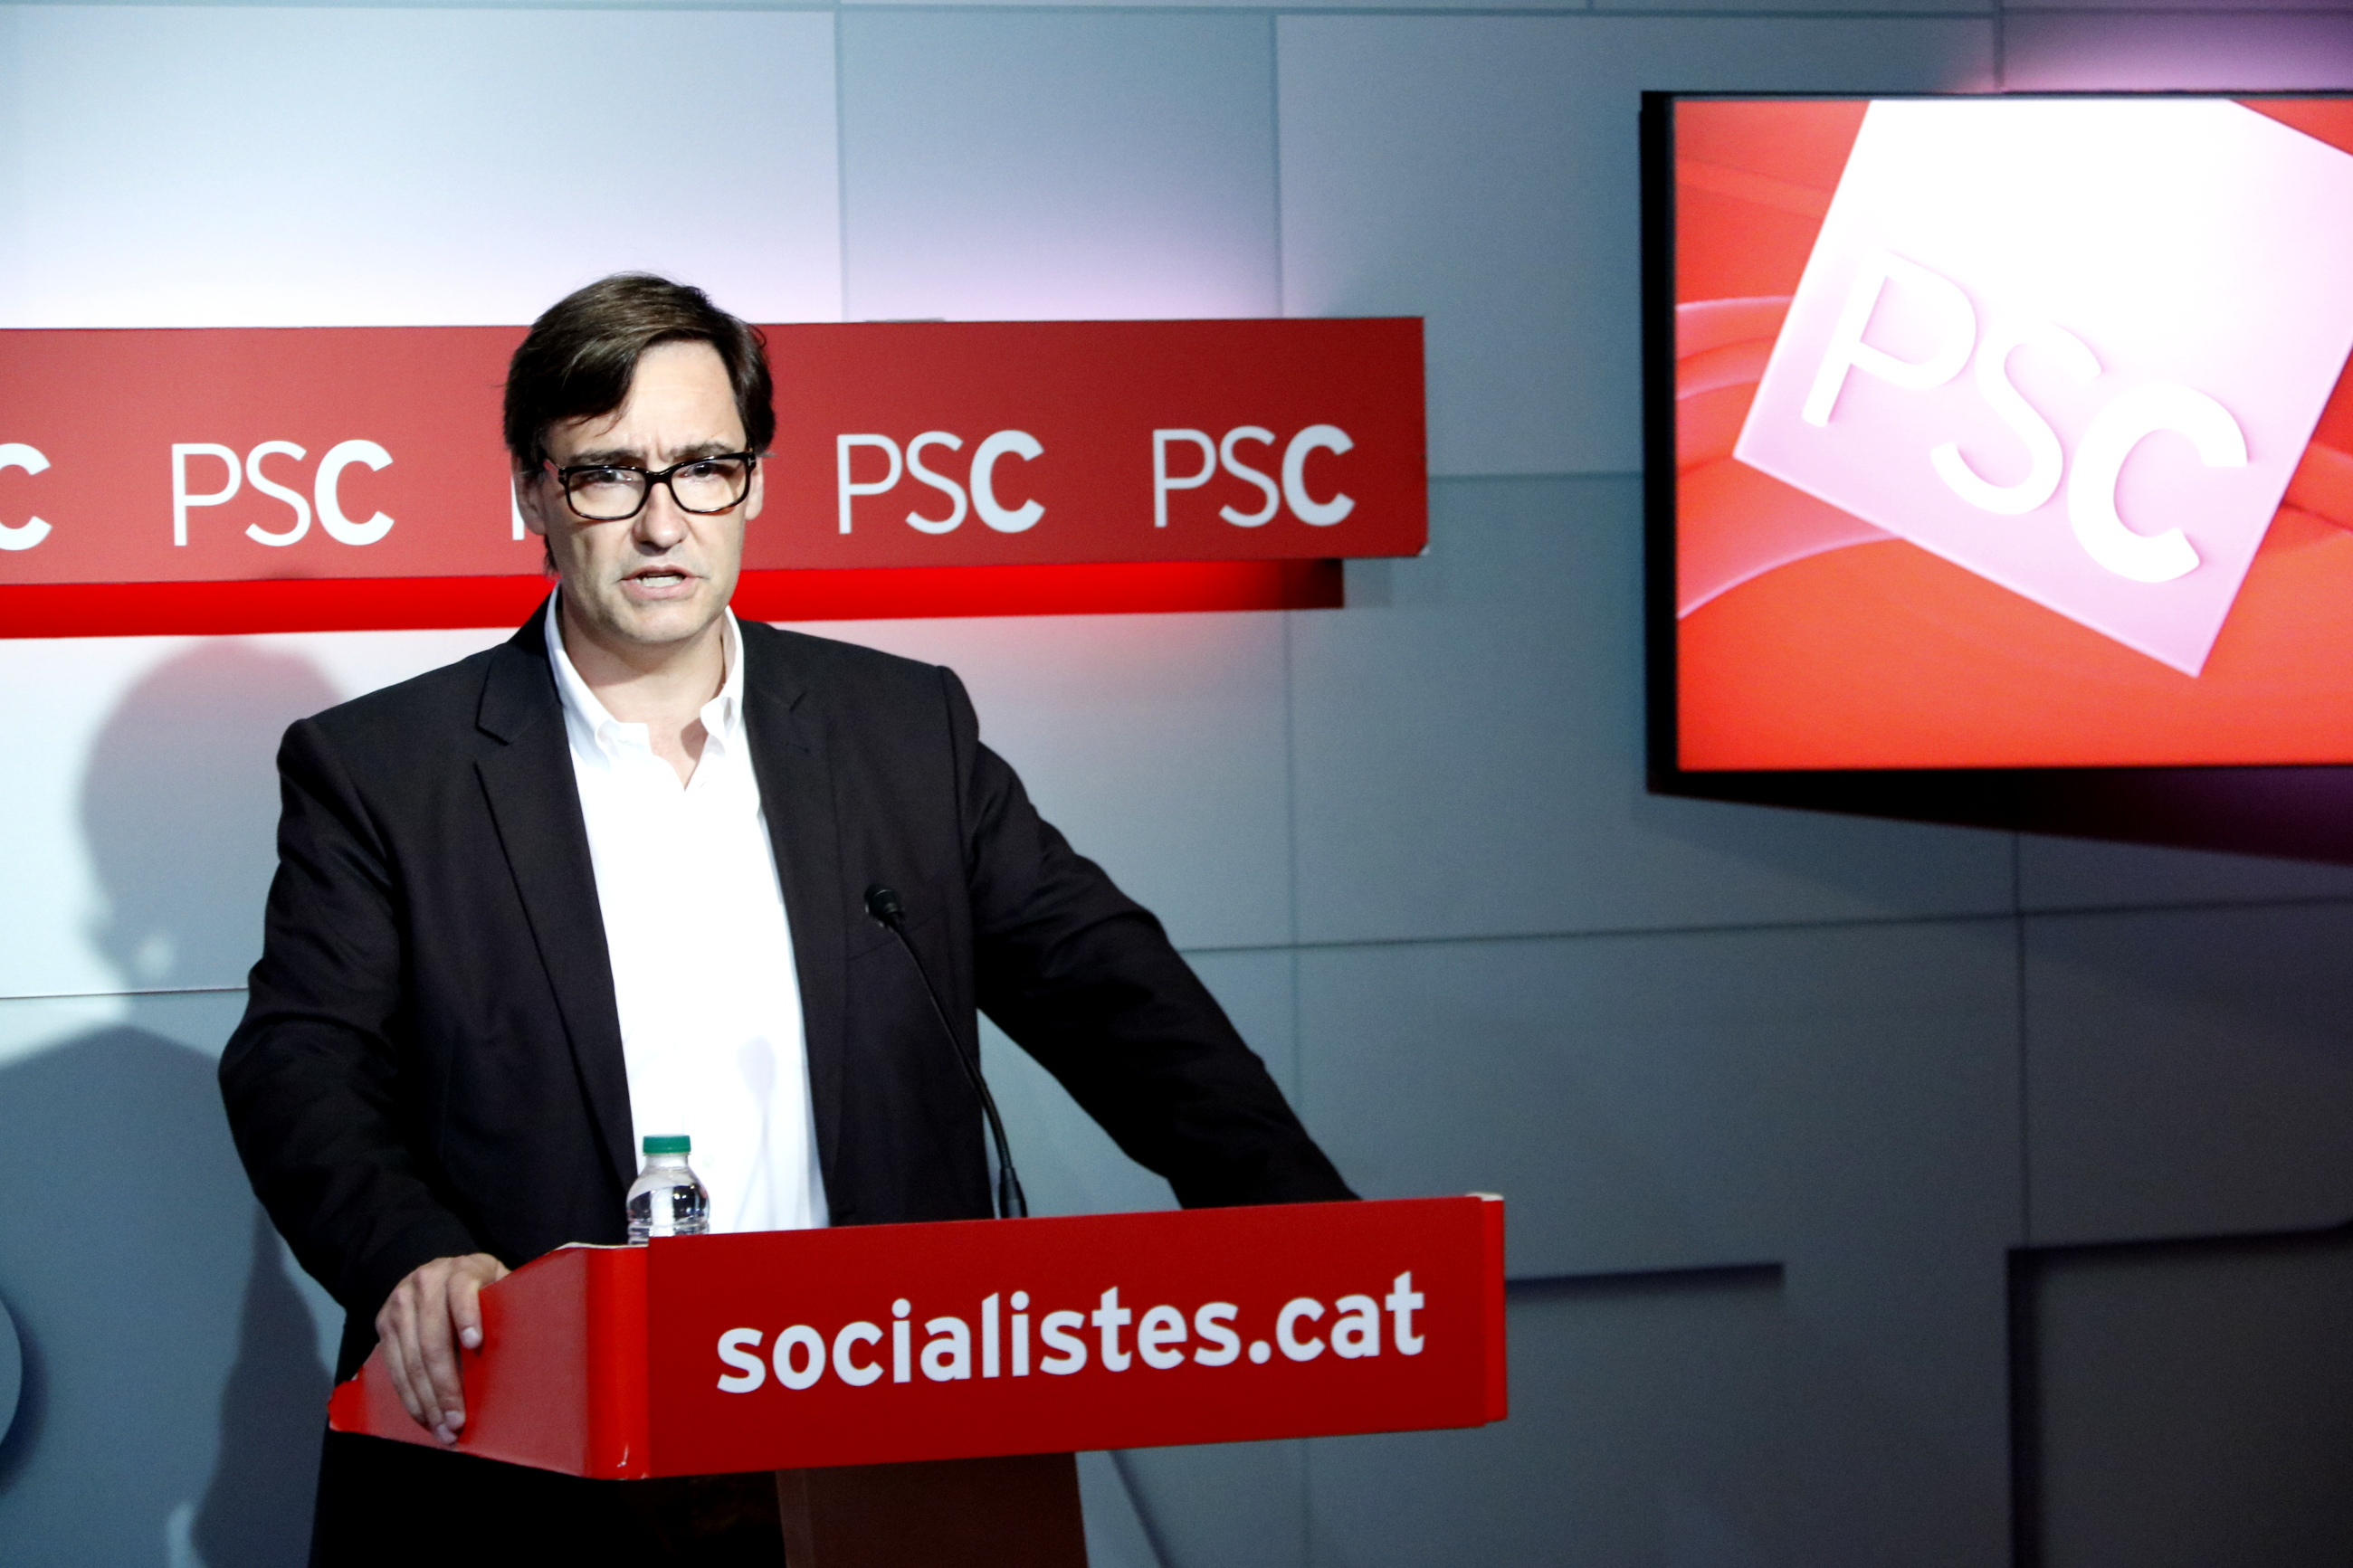 Catalan Socialists spokesman Salvador Illa